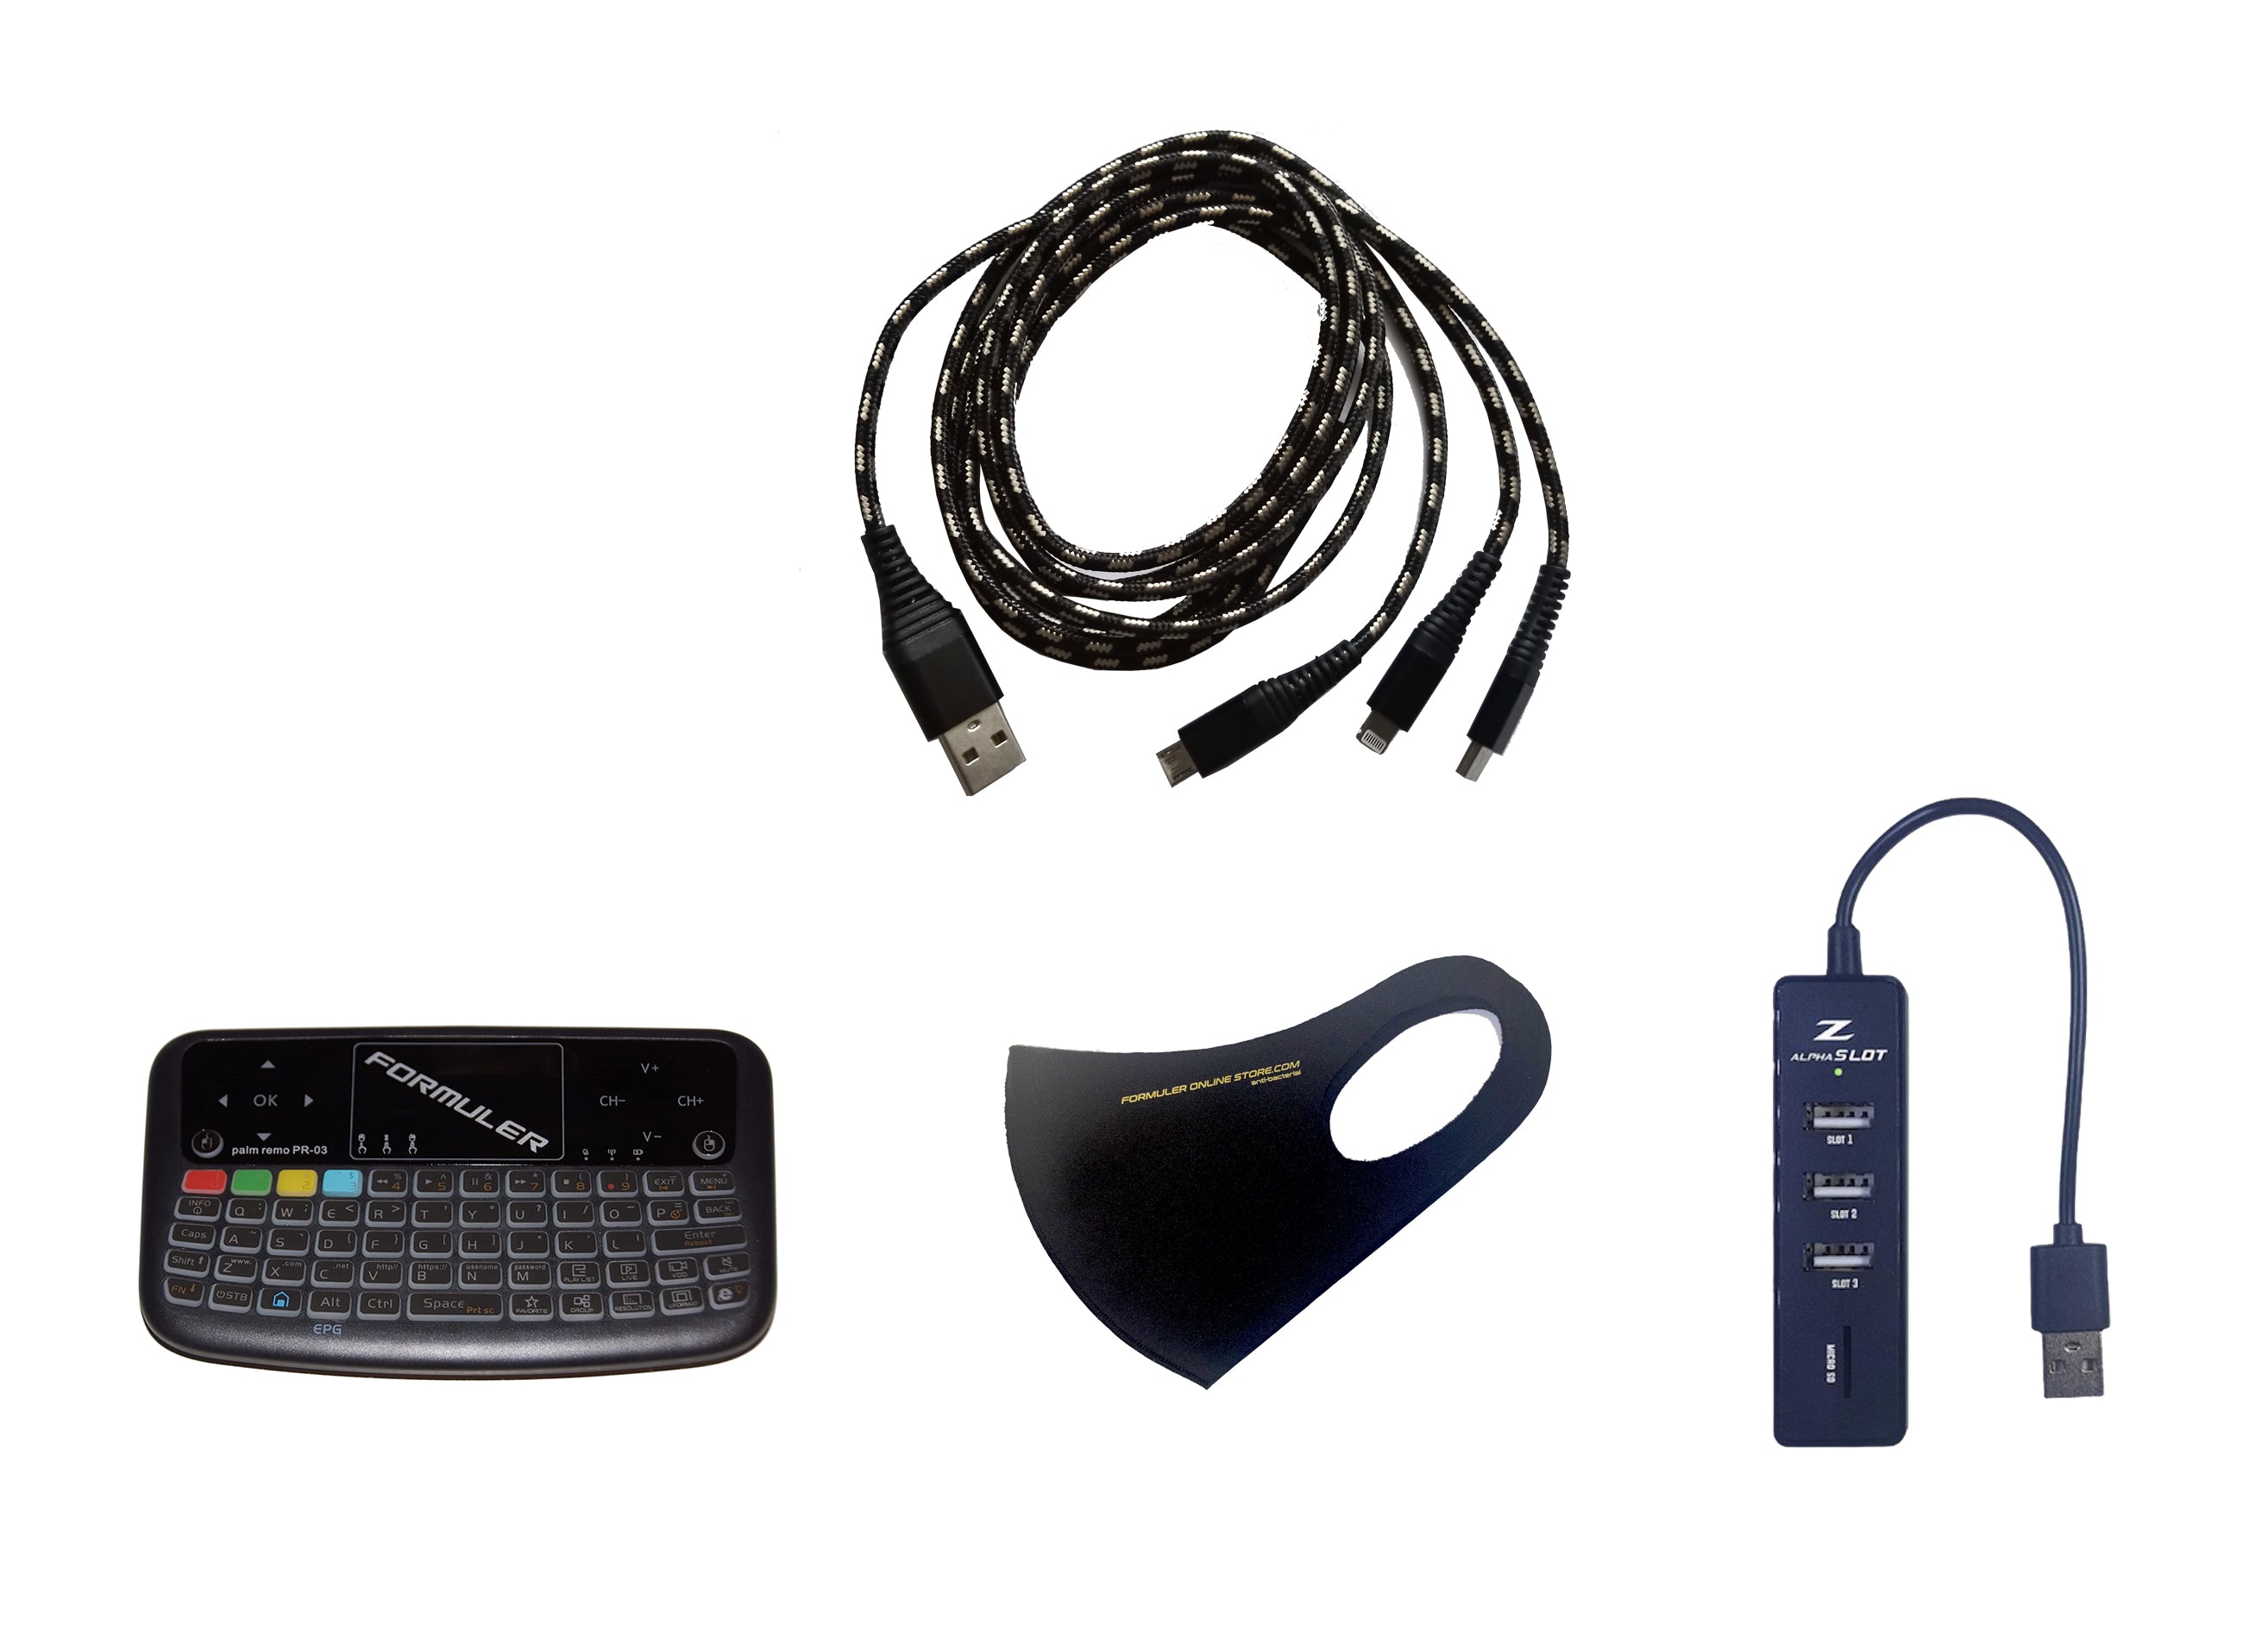 Paquete de accesorios incluido: Mini teclado inalámbrico con panel táctil + concentrador USB + extensión de cable USB 3-1 + máscara